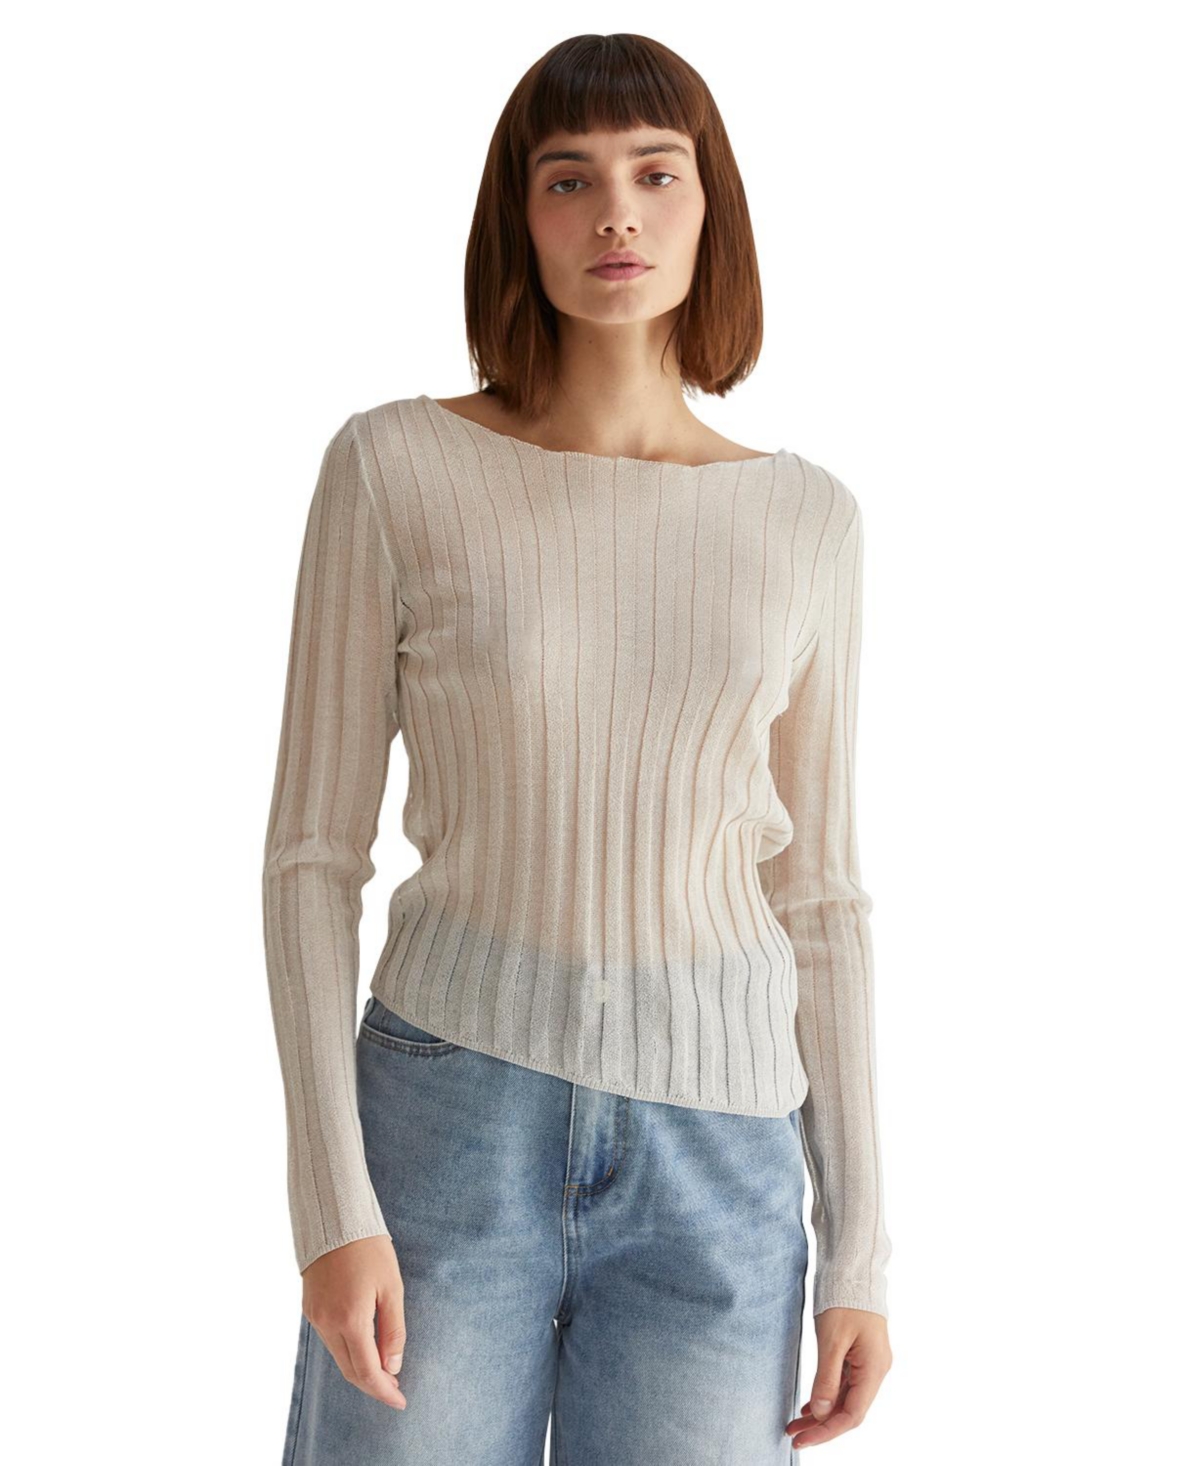 Women's Ellie Sheer Rib Sweater Top - Light/pastel grey + light grey